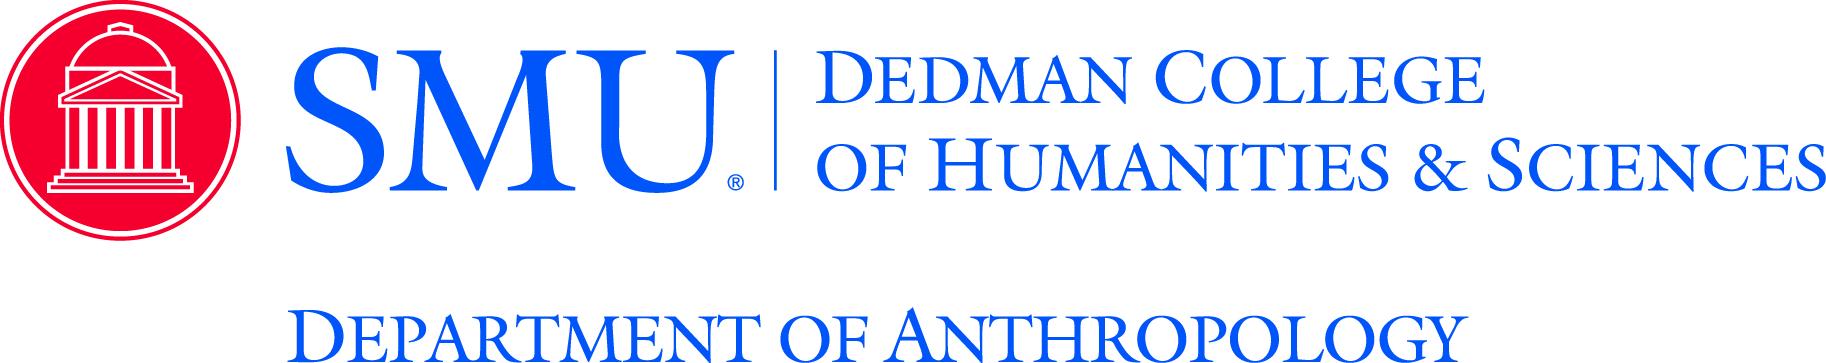 Department Logos Smu Dedman College Of Humanites Sciences